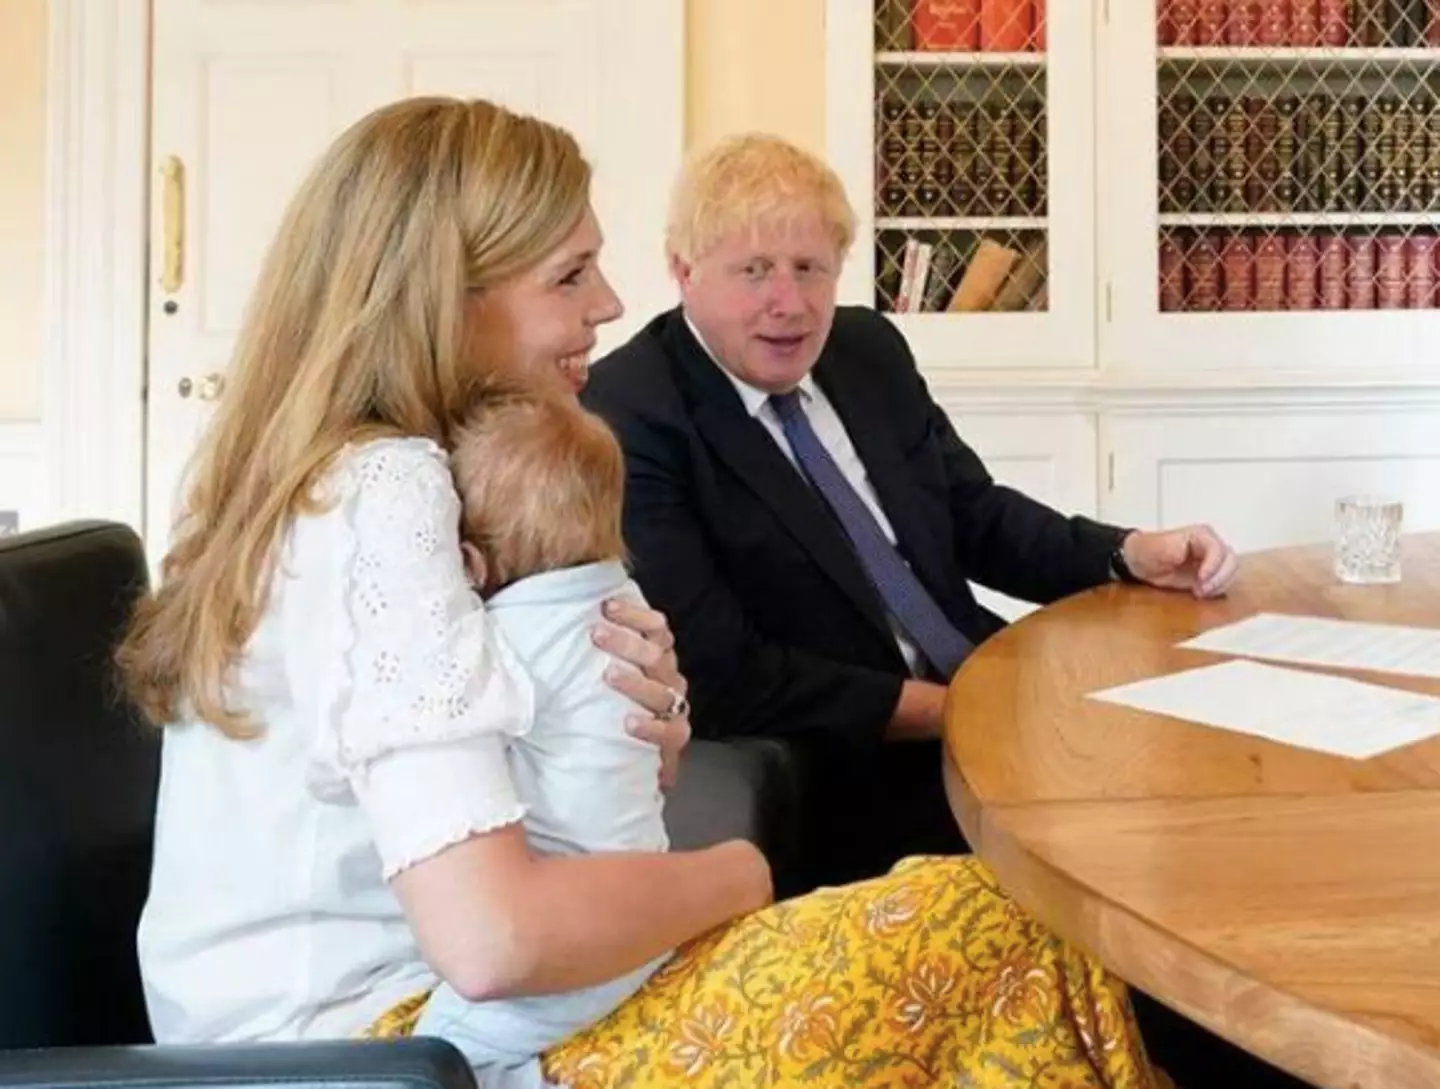 Boris Johnson welcomed son Wilfred last year (